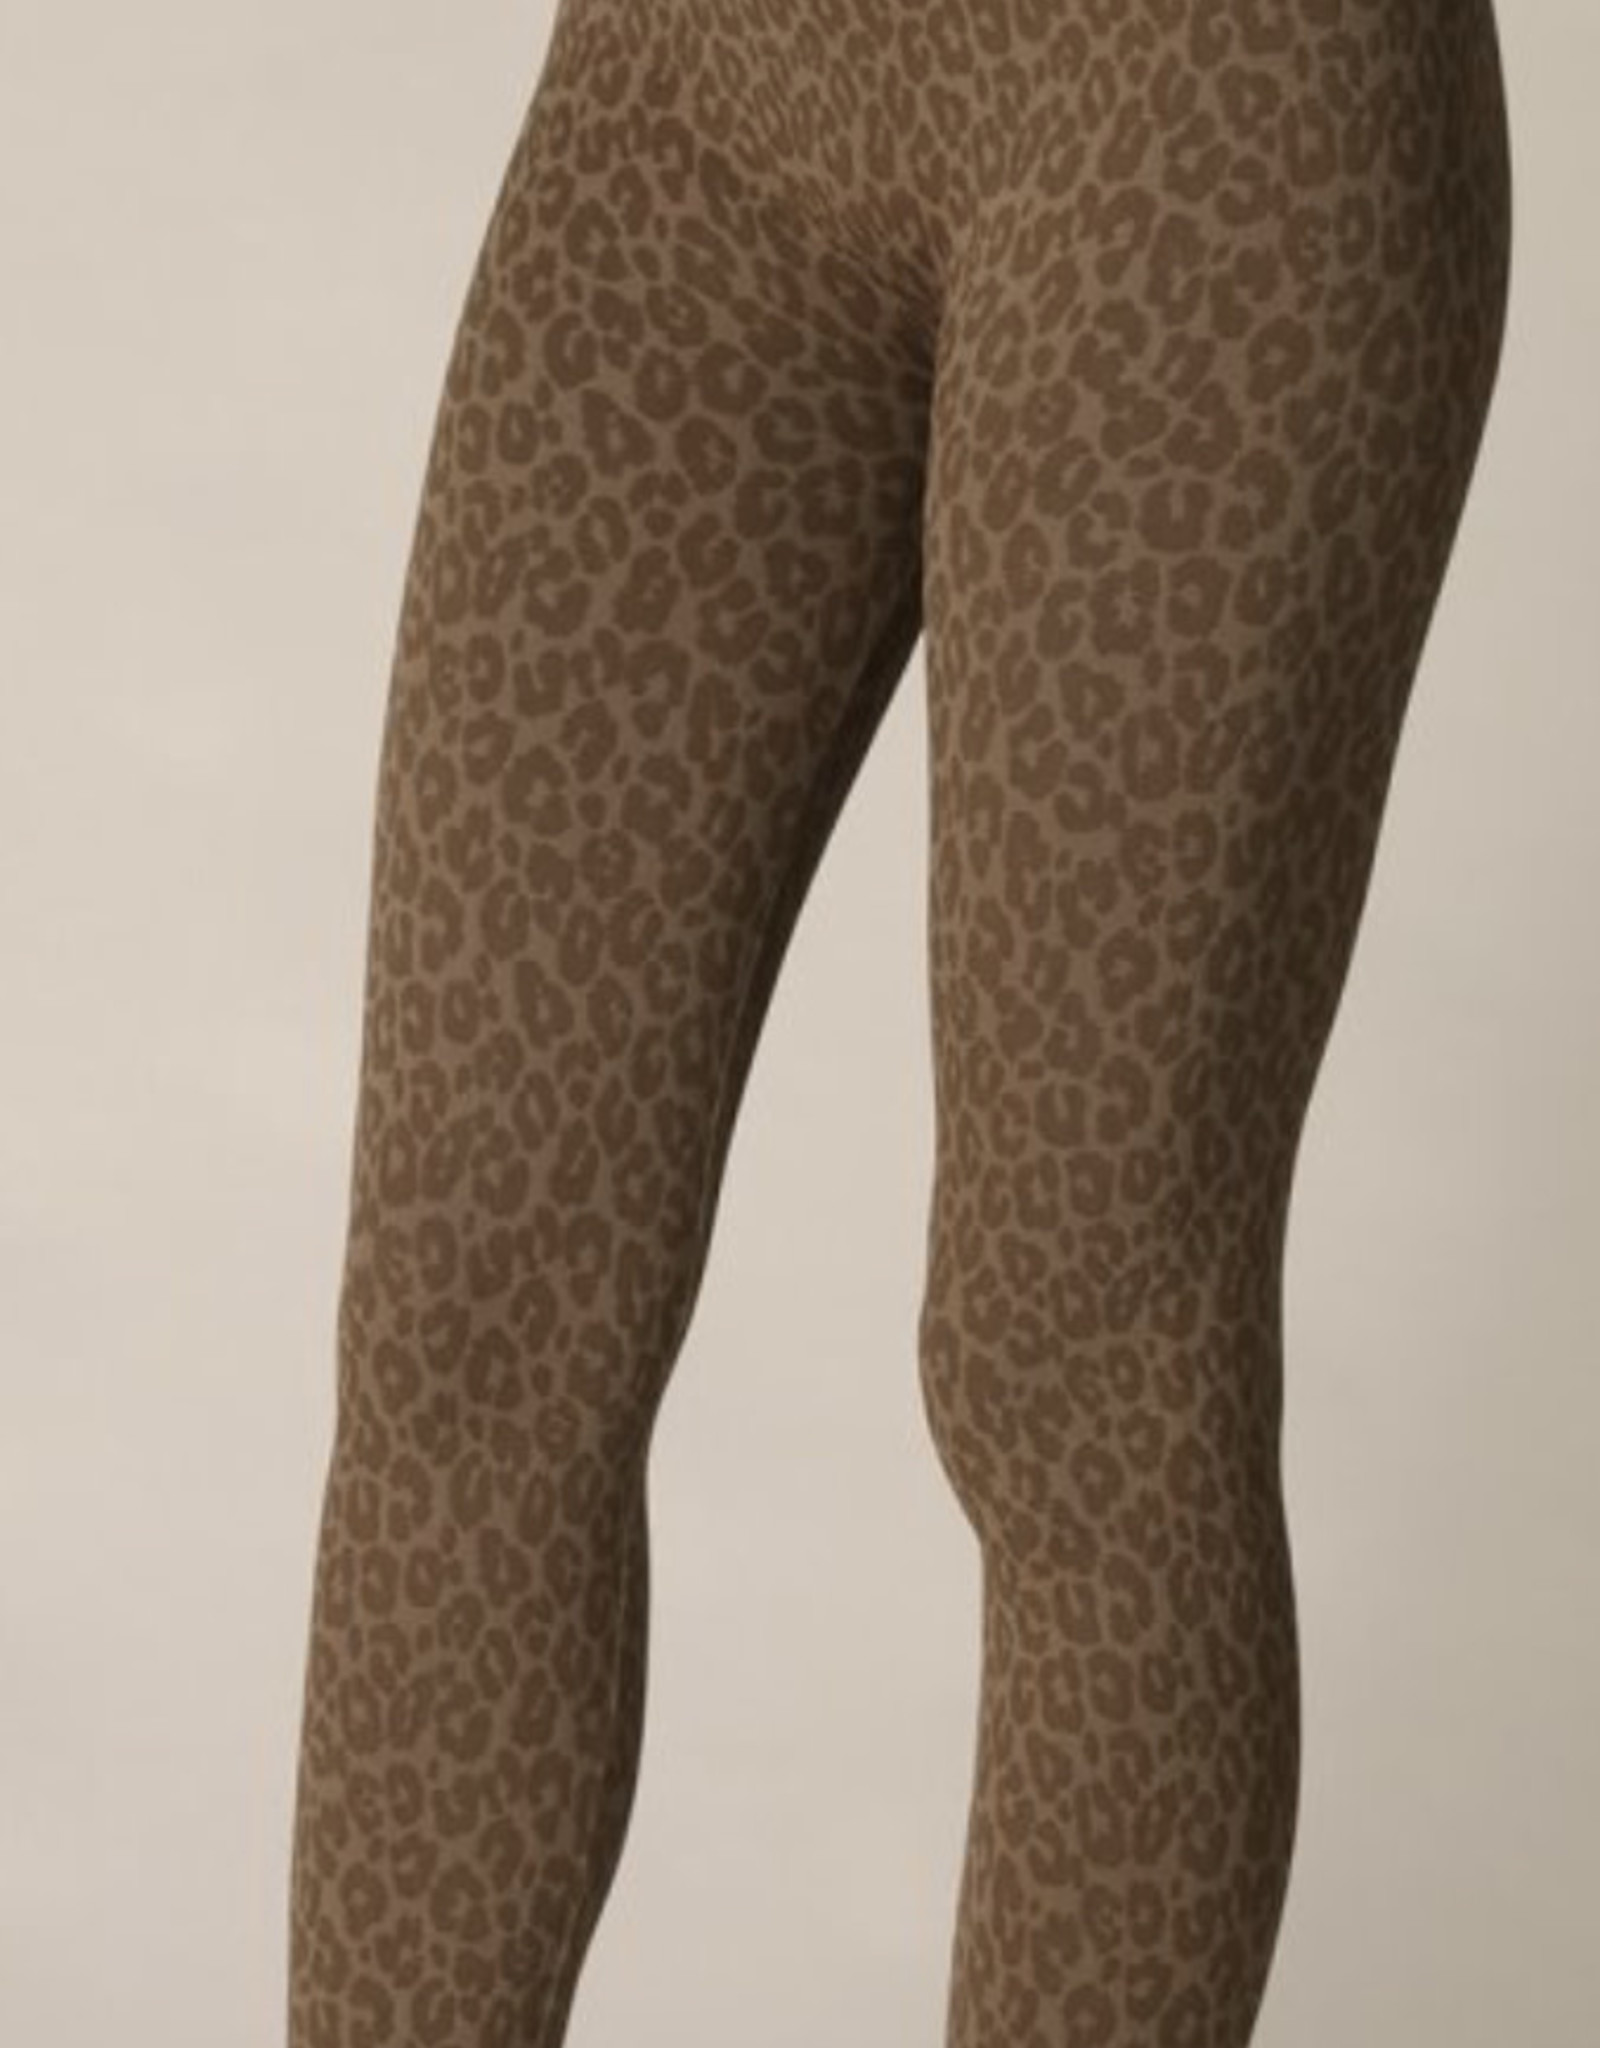 Vivid Leopard Leggings